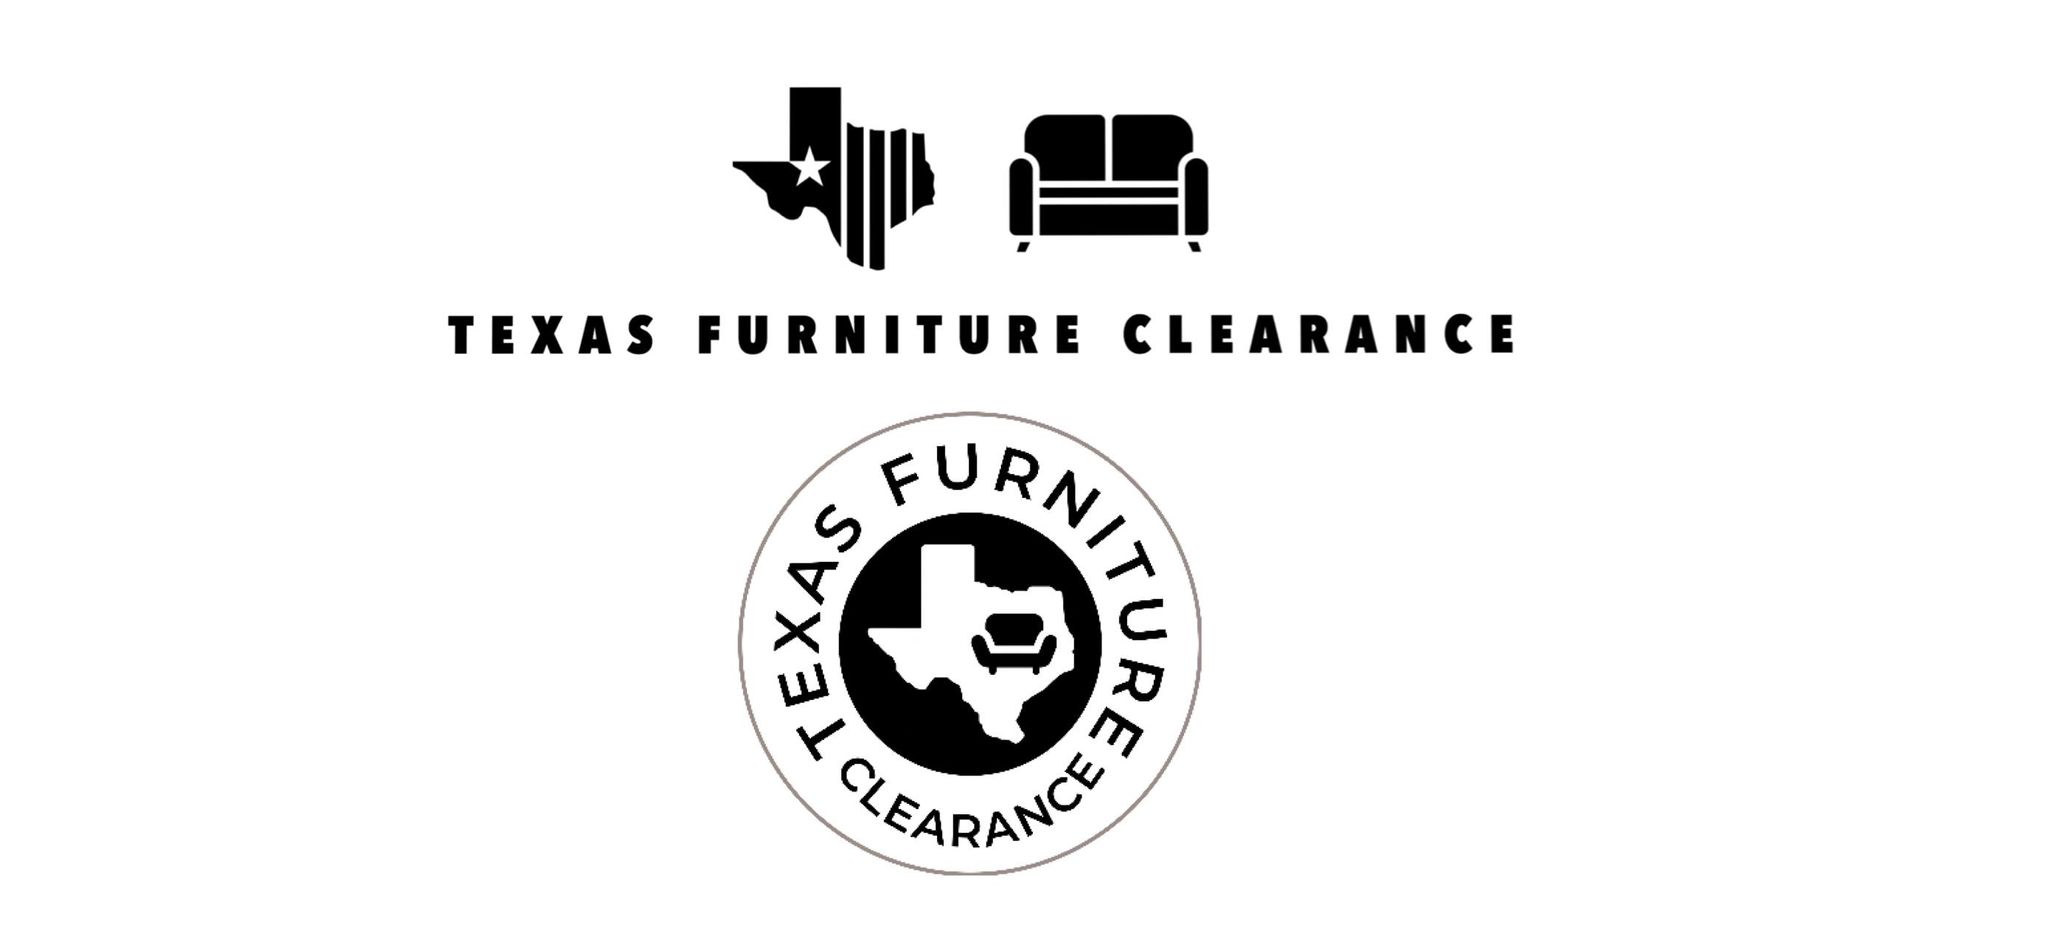 Texas Furniture Clearance - Furniture & Mattress Store